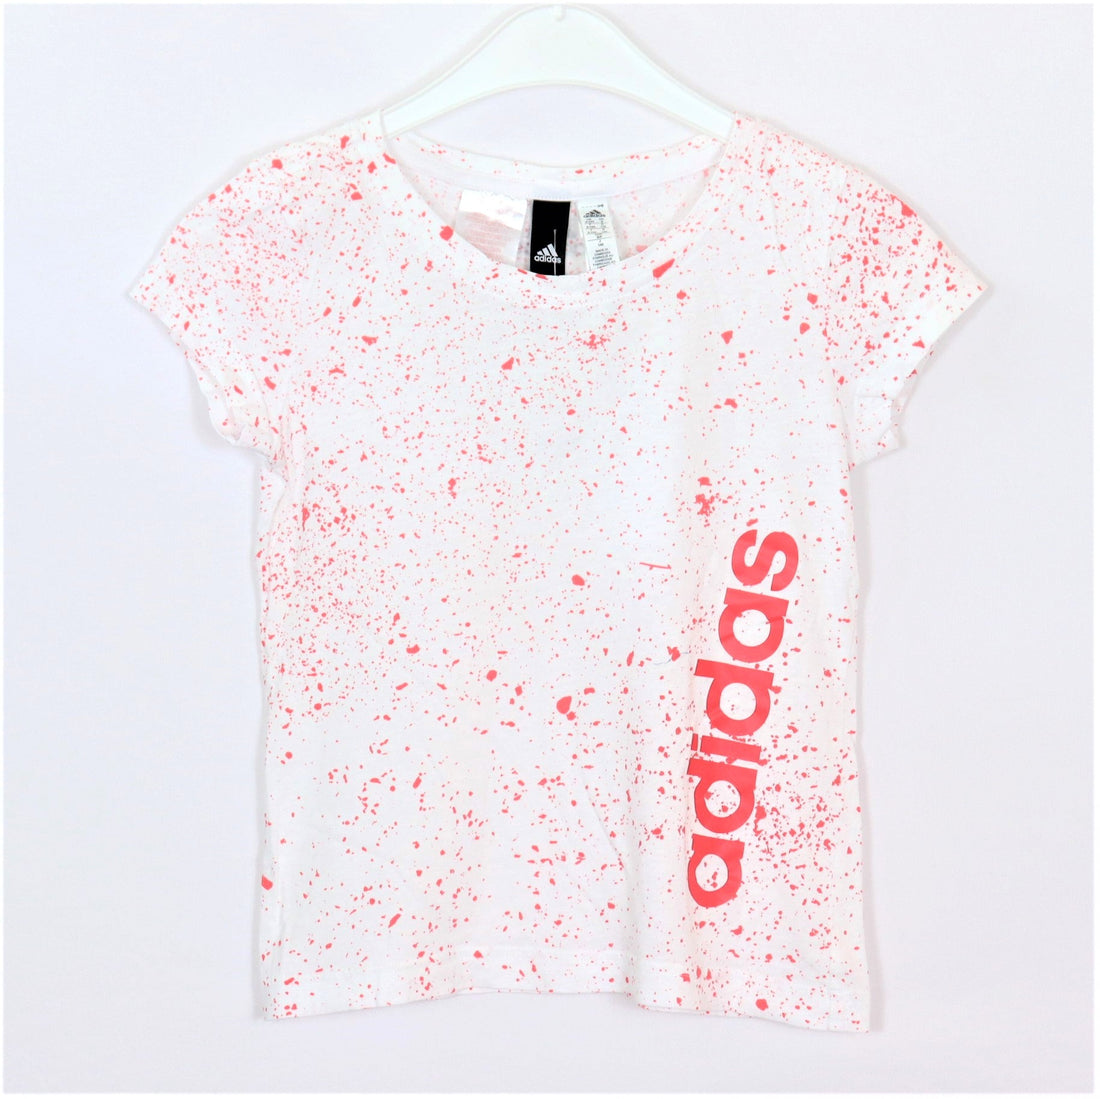 T-Shirt - Adidas - 140 - rot-weiß - gepunktet - Girl - sehr guter Zustand